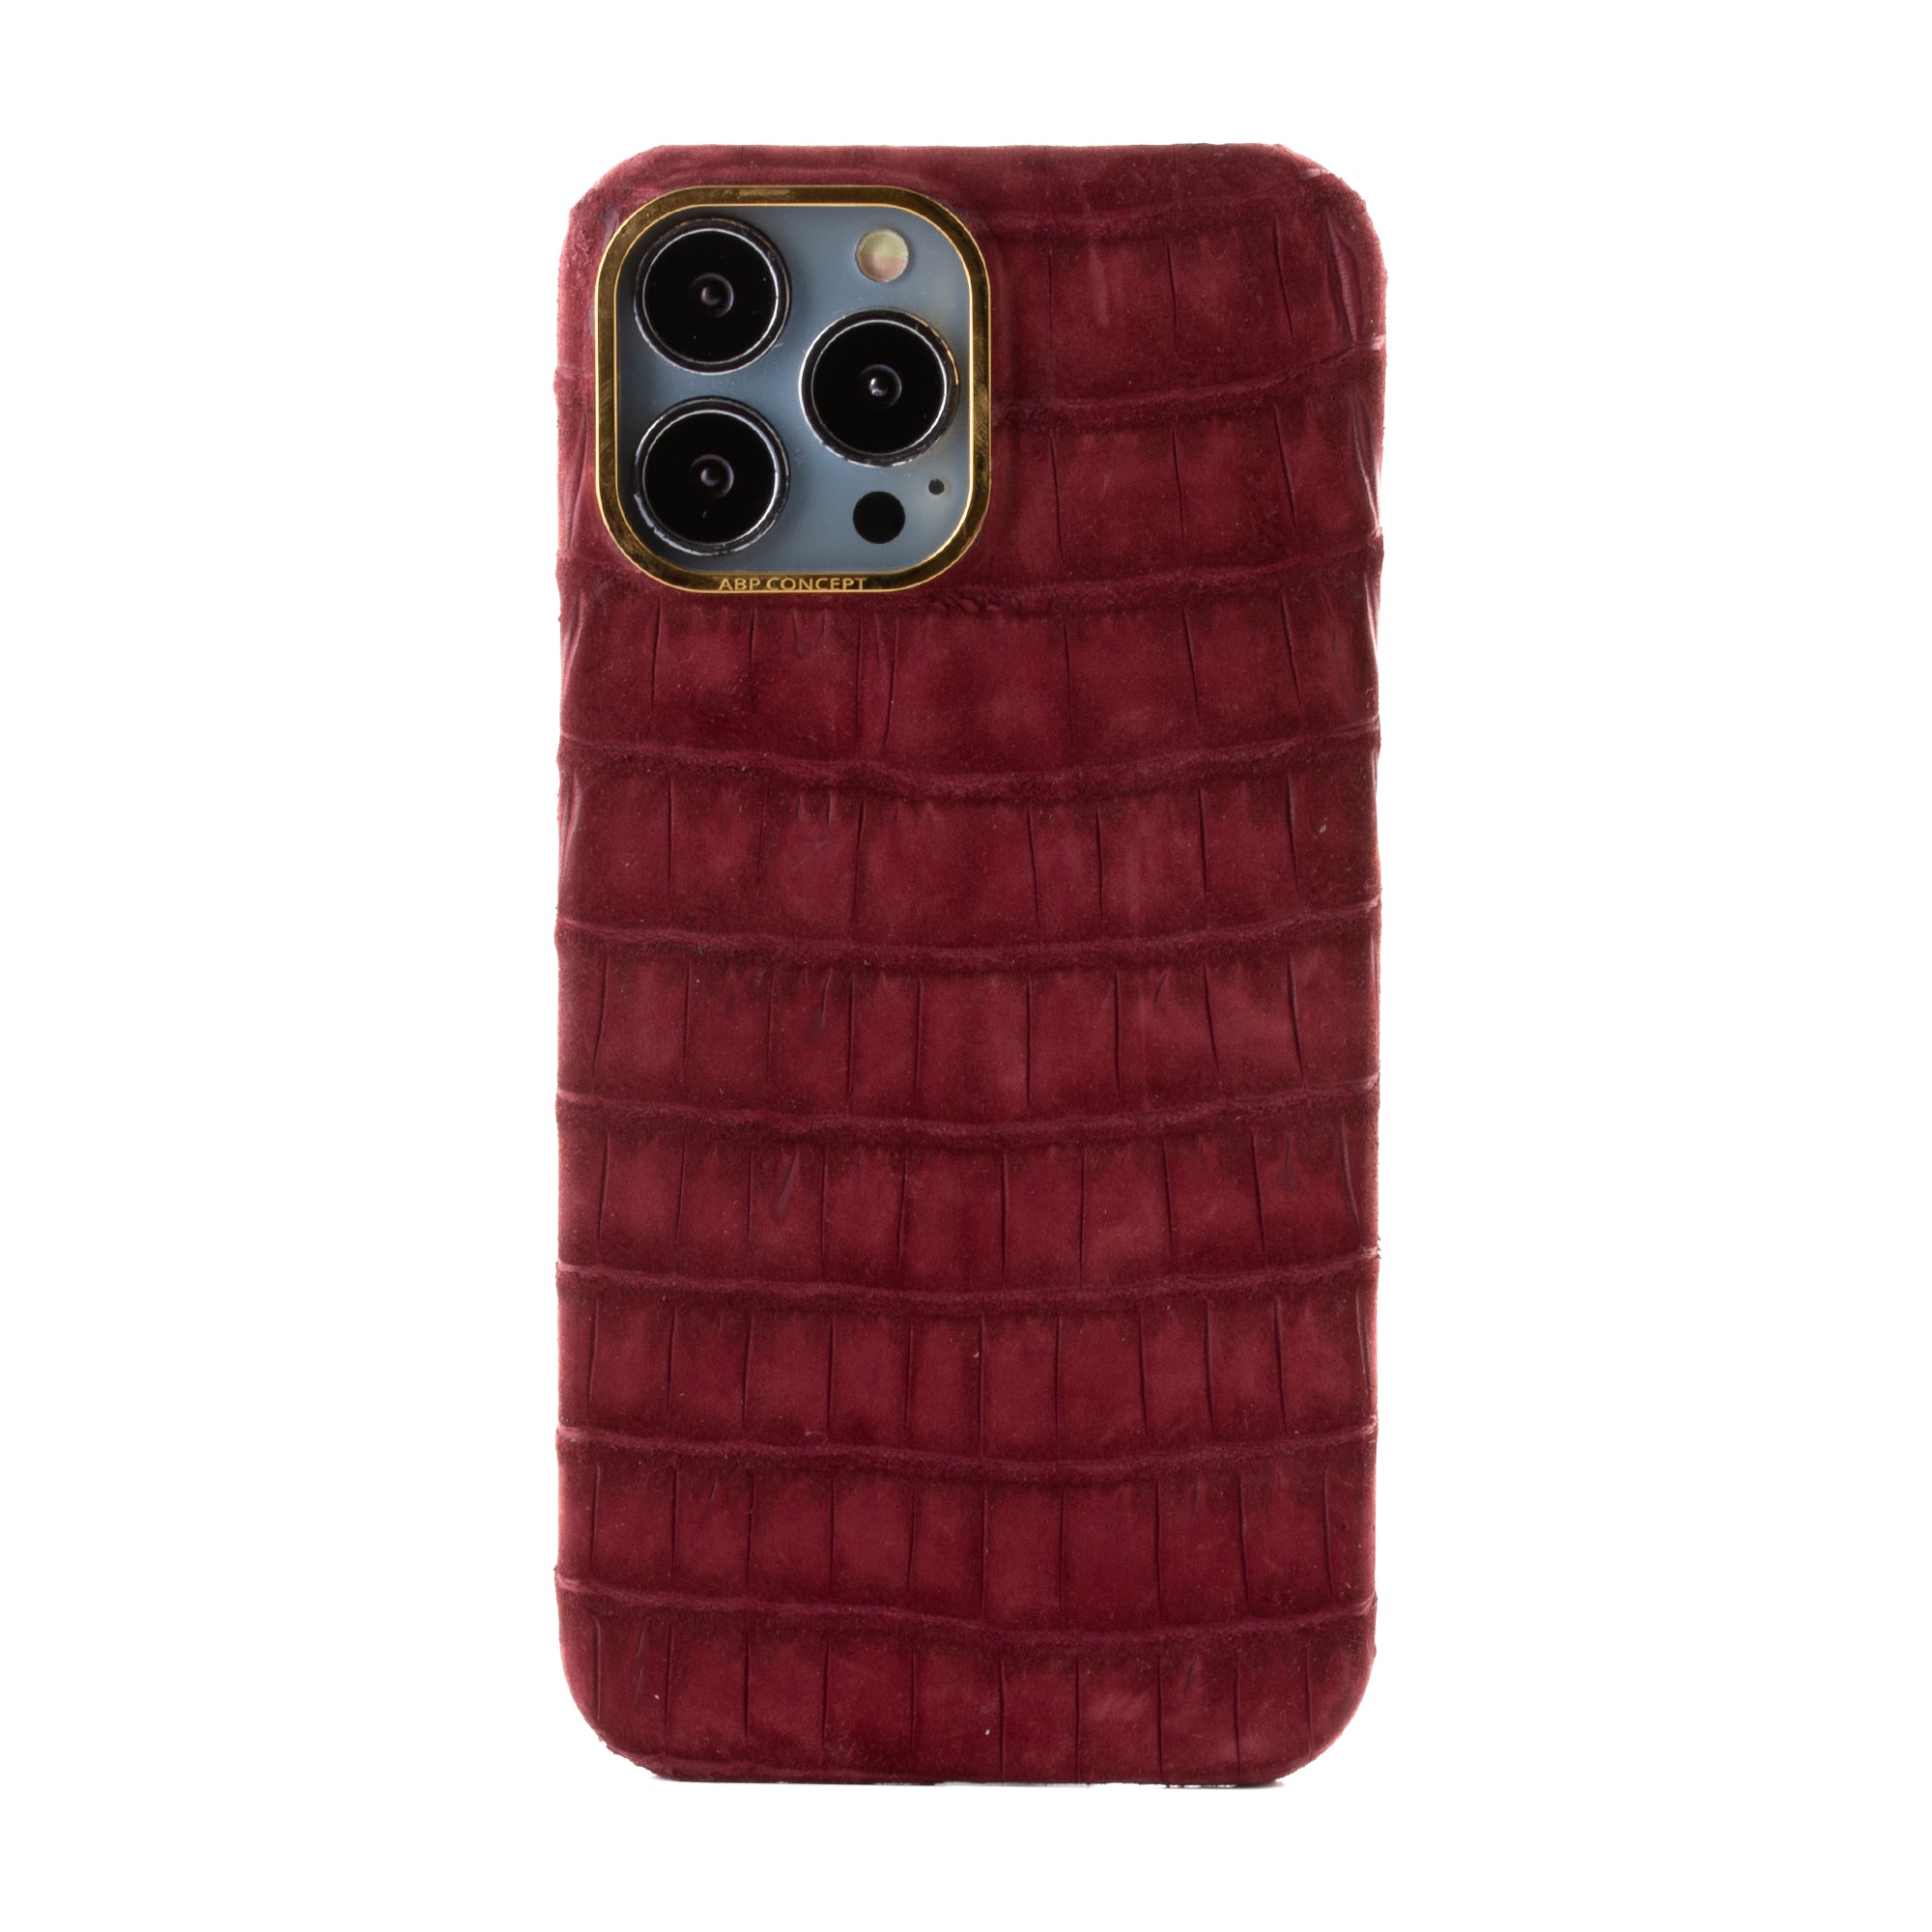 Clearance Sale - Leather iPhone case - iPhone 13 Pro Max - Nubuck burgundy alligator